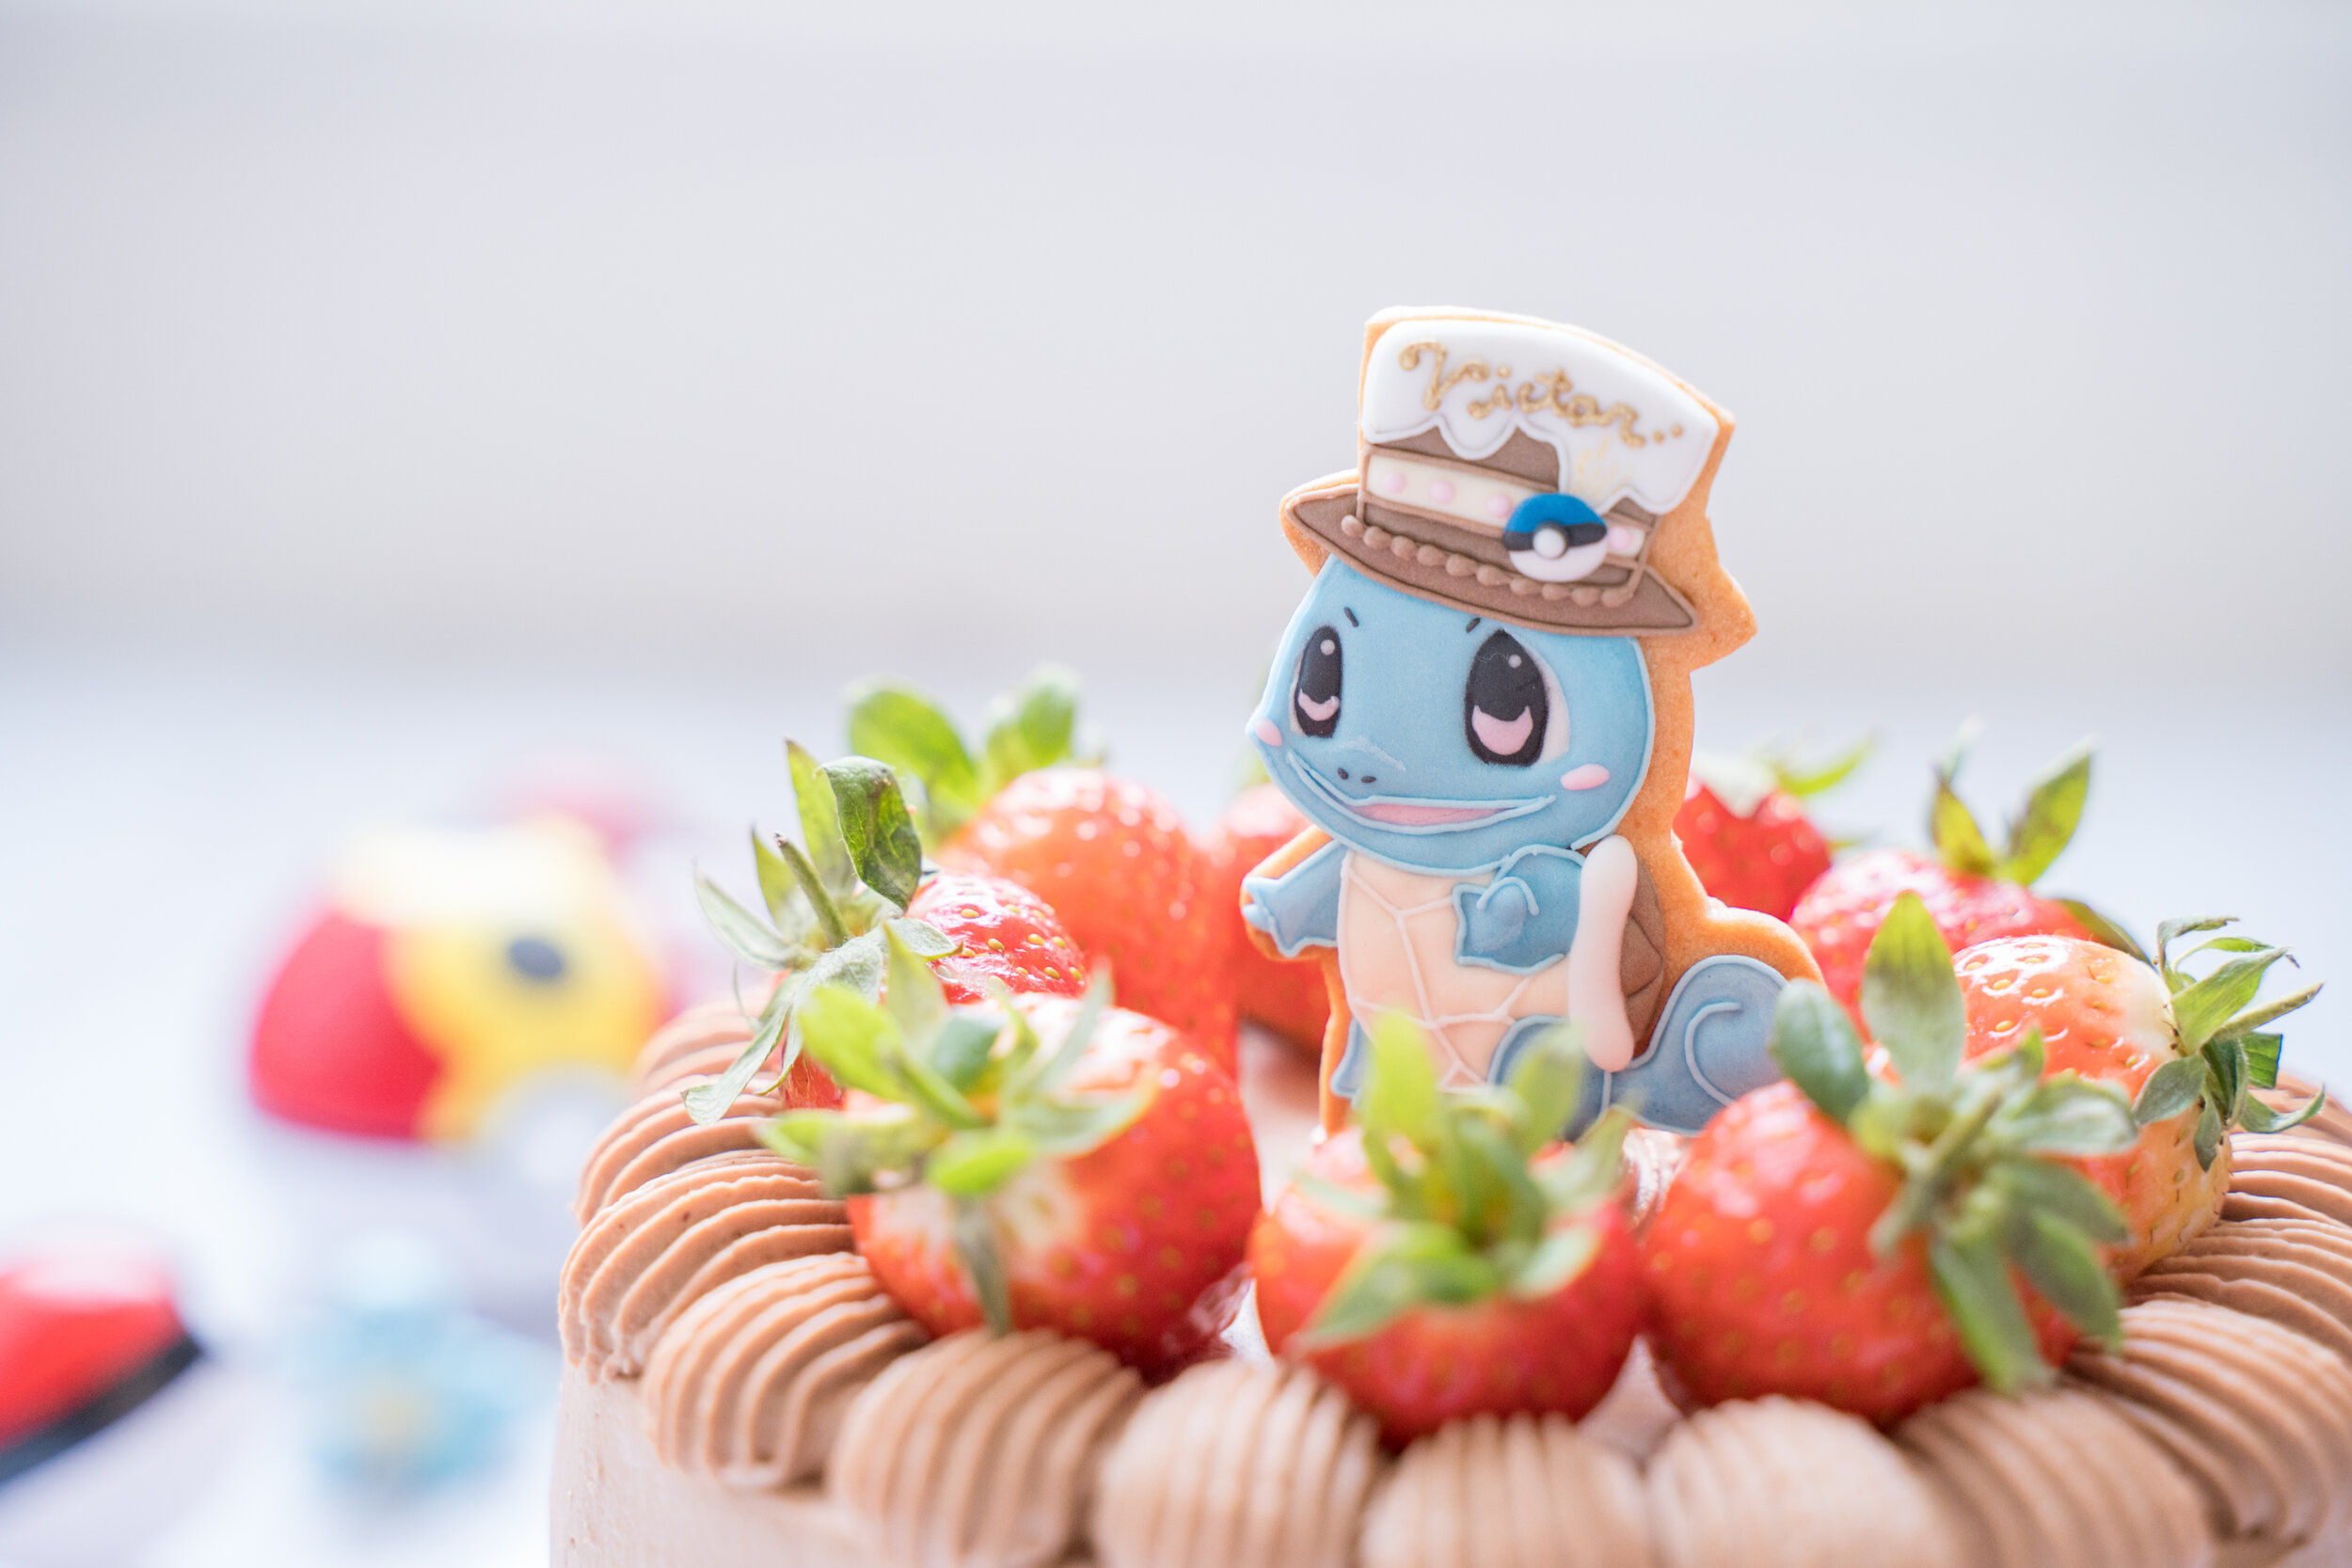 Pokemon Squirtle Chocolate Cake ゼニガメのチョコレートケーキ Coucou Natsuha